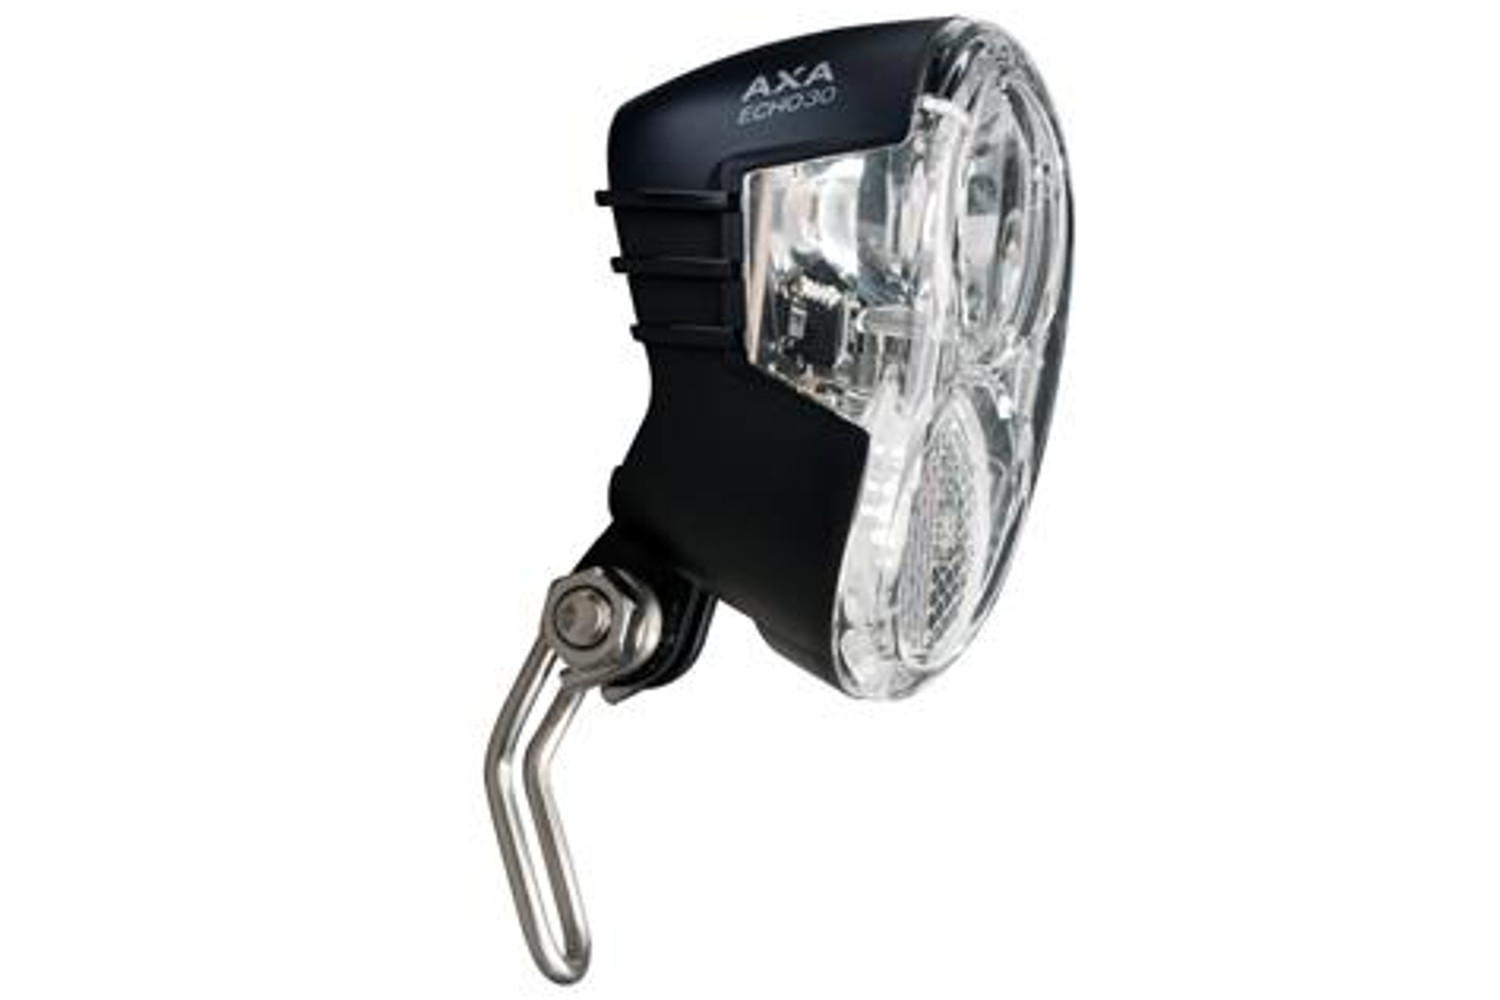 AXA Scheinwerfer LED 30 Lux für Nabendynamo Auto  